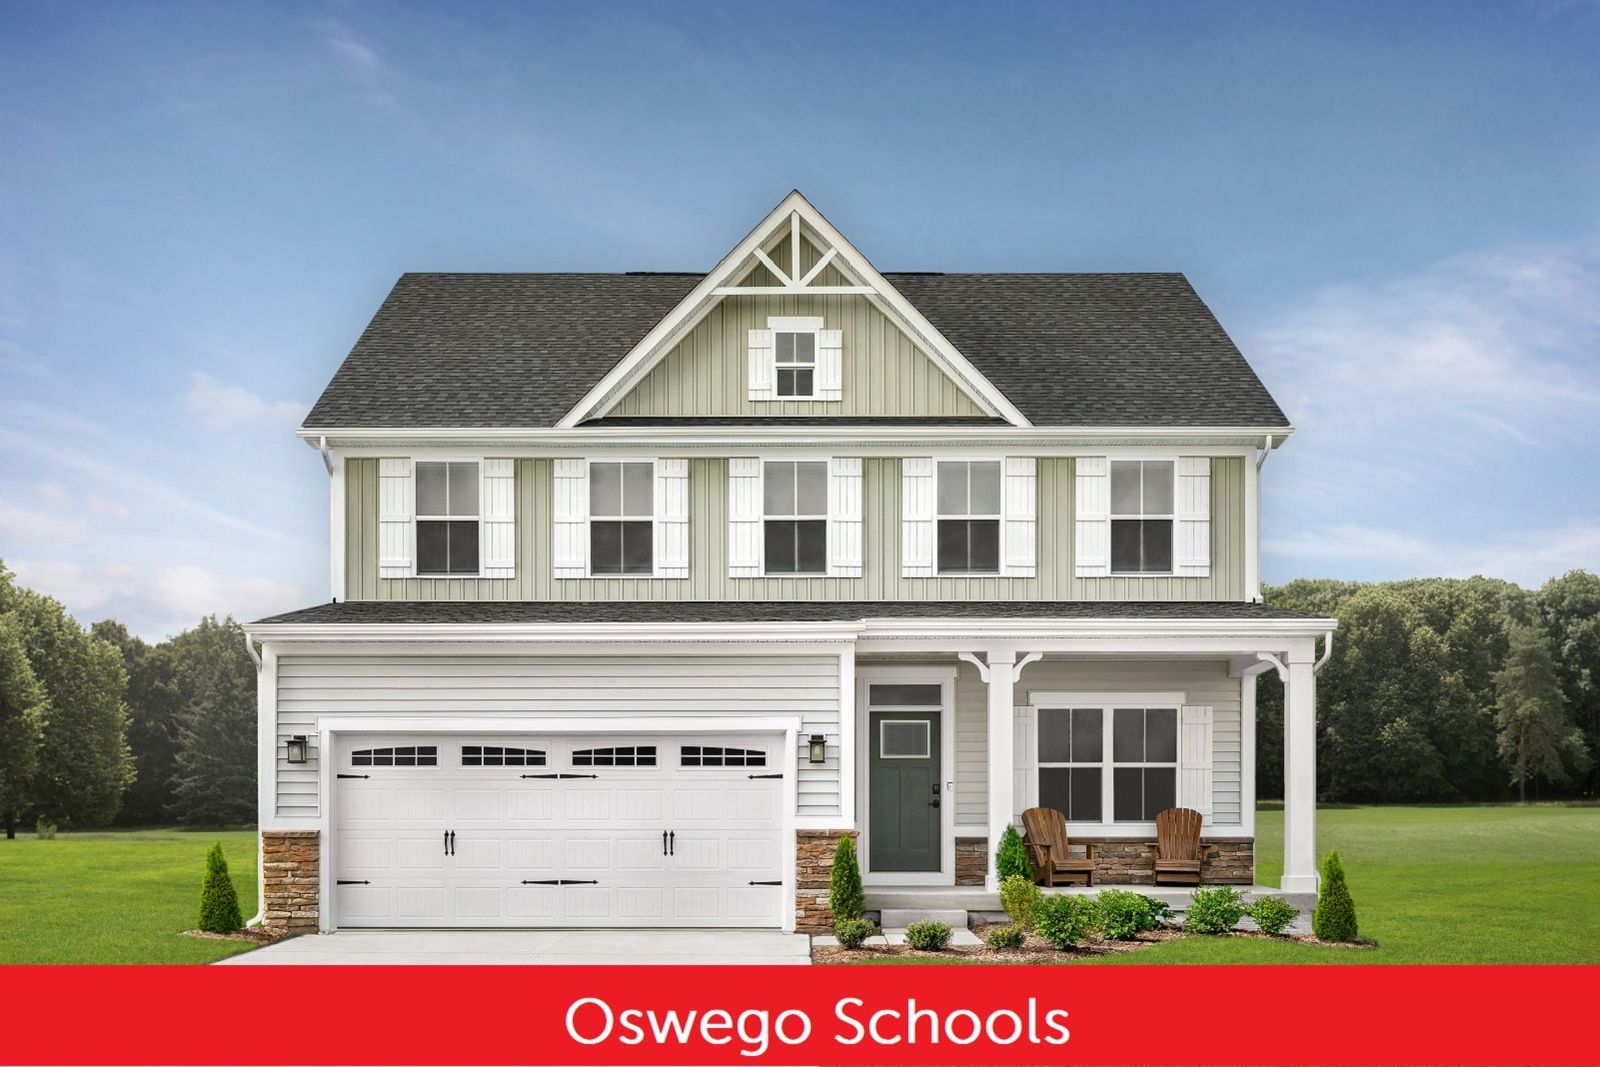 New Homes in Oswego Schools